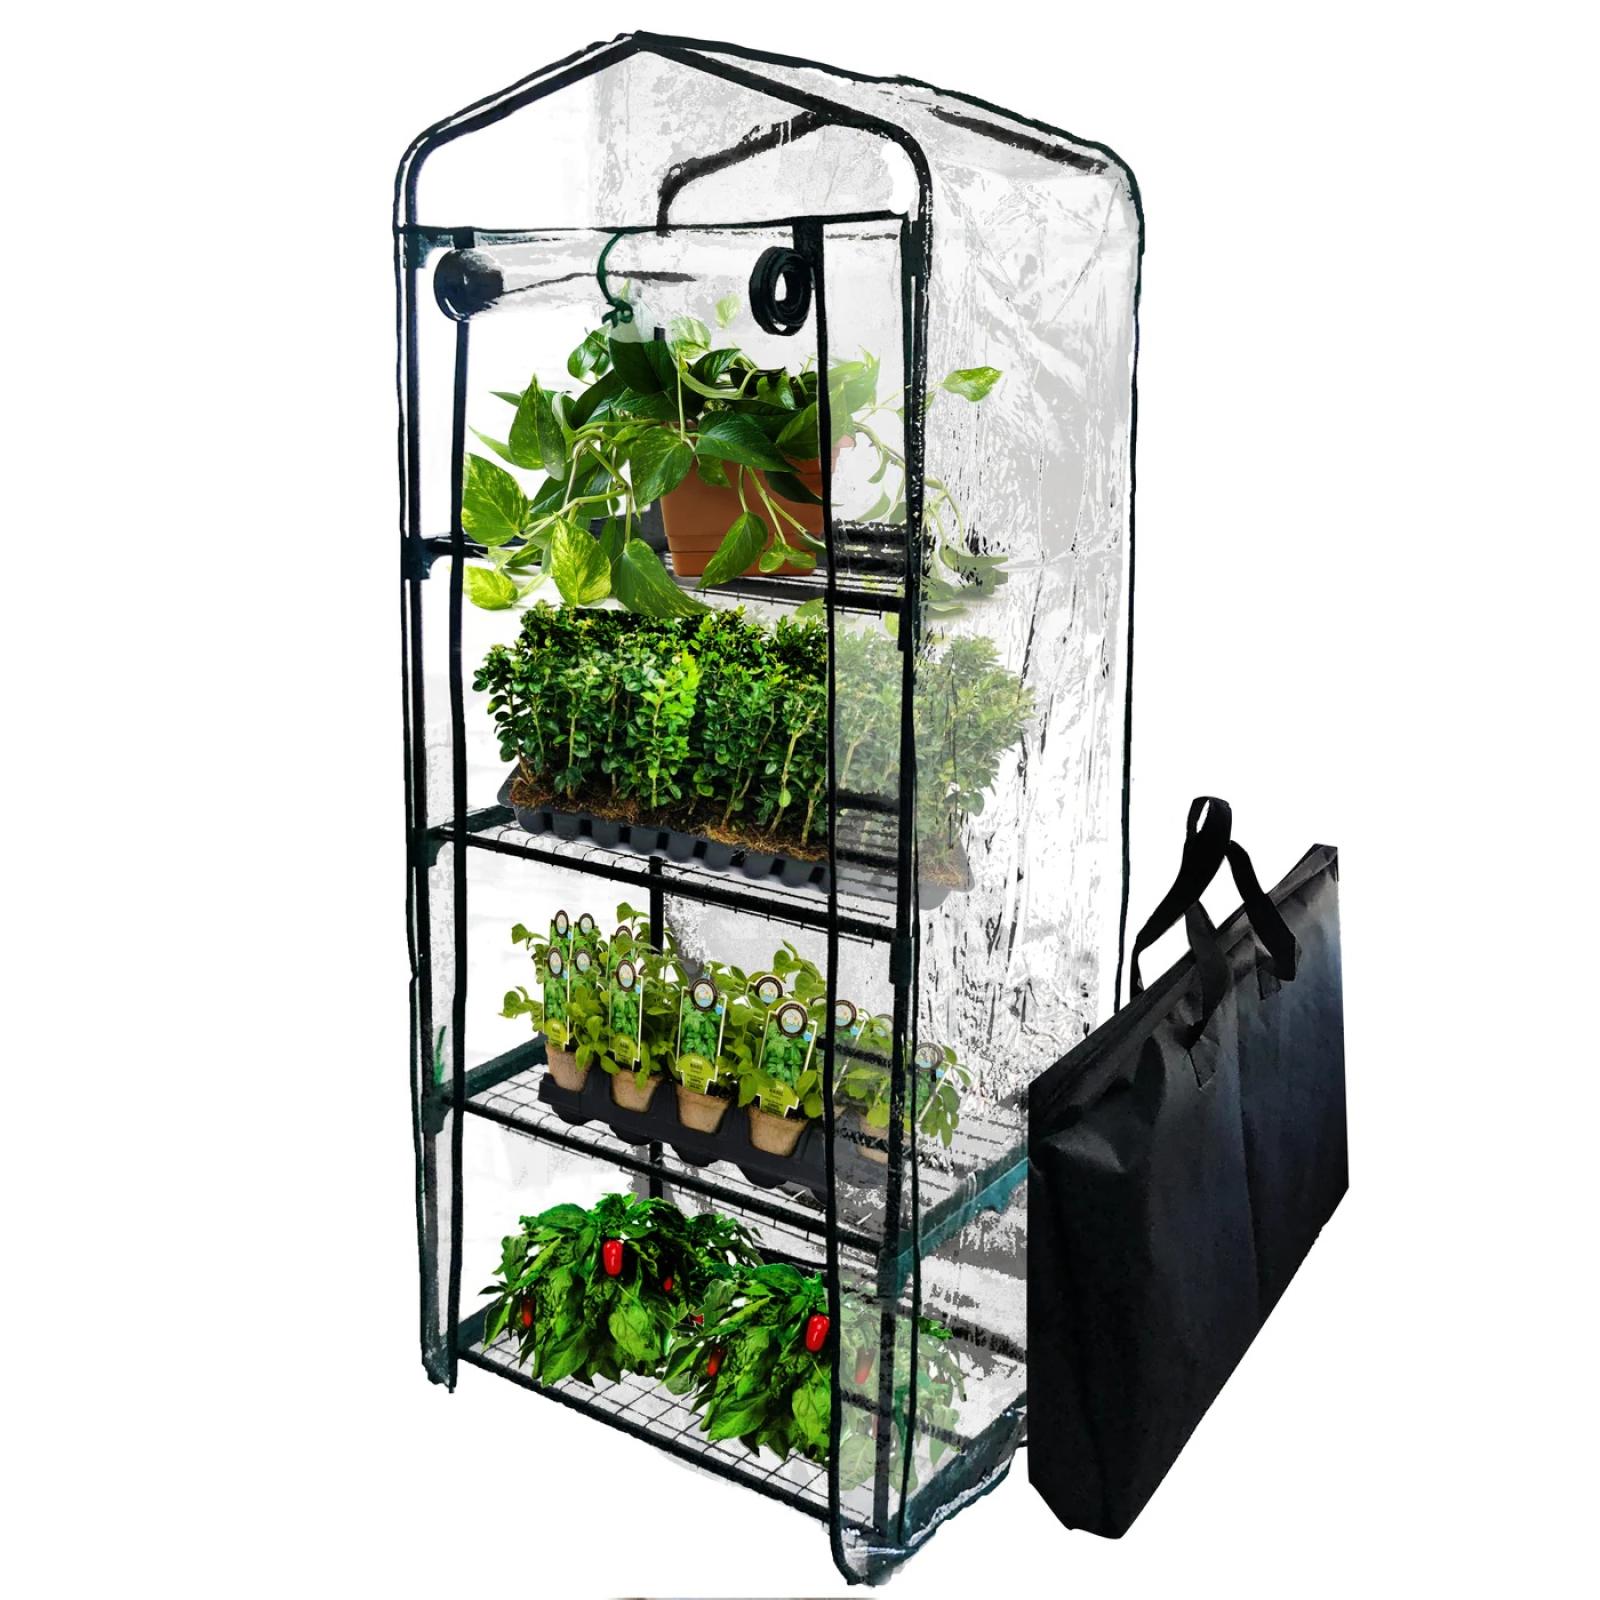 Backyard Expressions Portable Mini Greenhouse